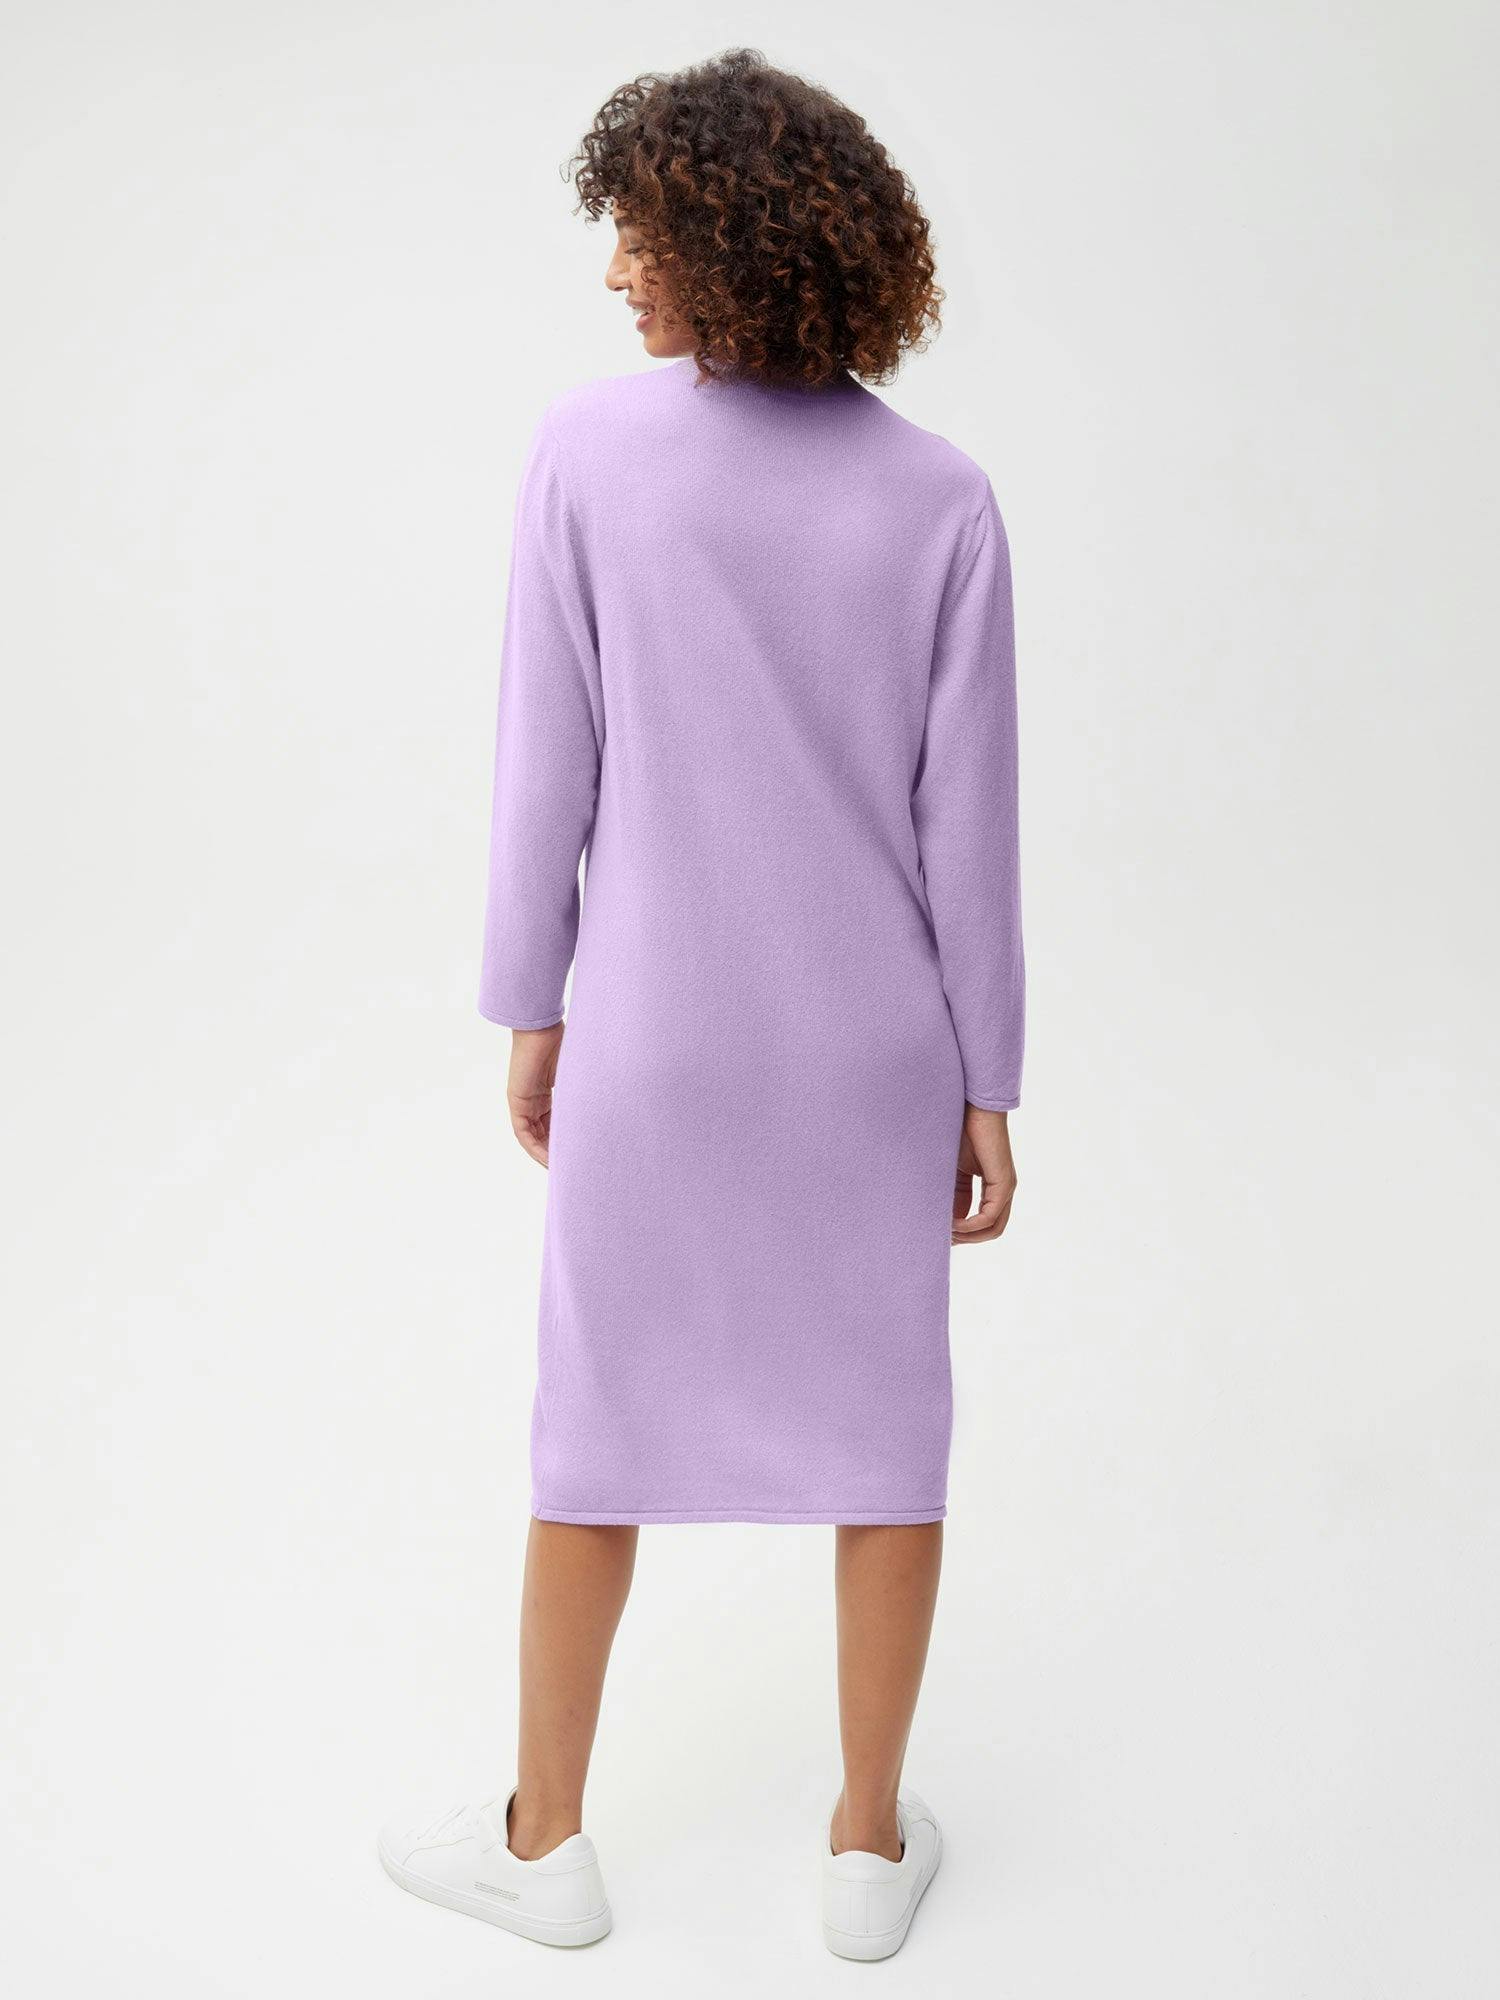 https://cdn.shopify.com/s/files/1/0035/1309/0115/products/Cashmere-Womens-Turtleneck-Dress-Orchid-Purple-Female-2.jpg?v=1662476046